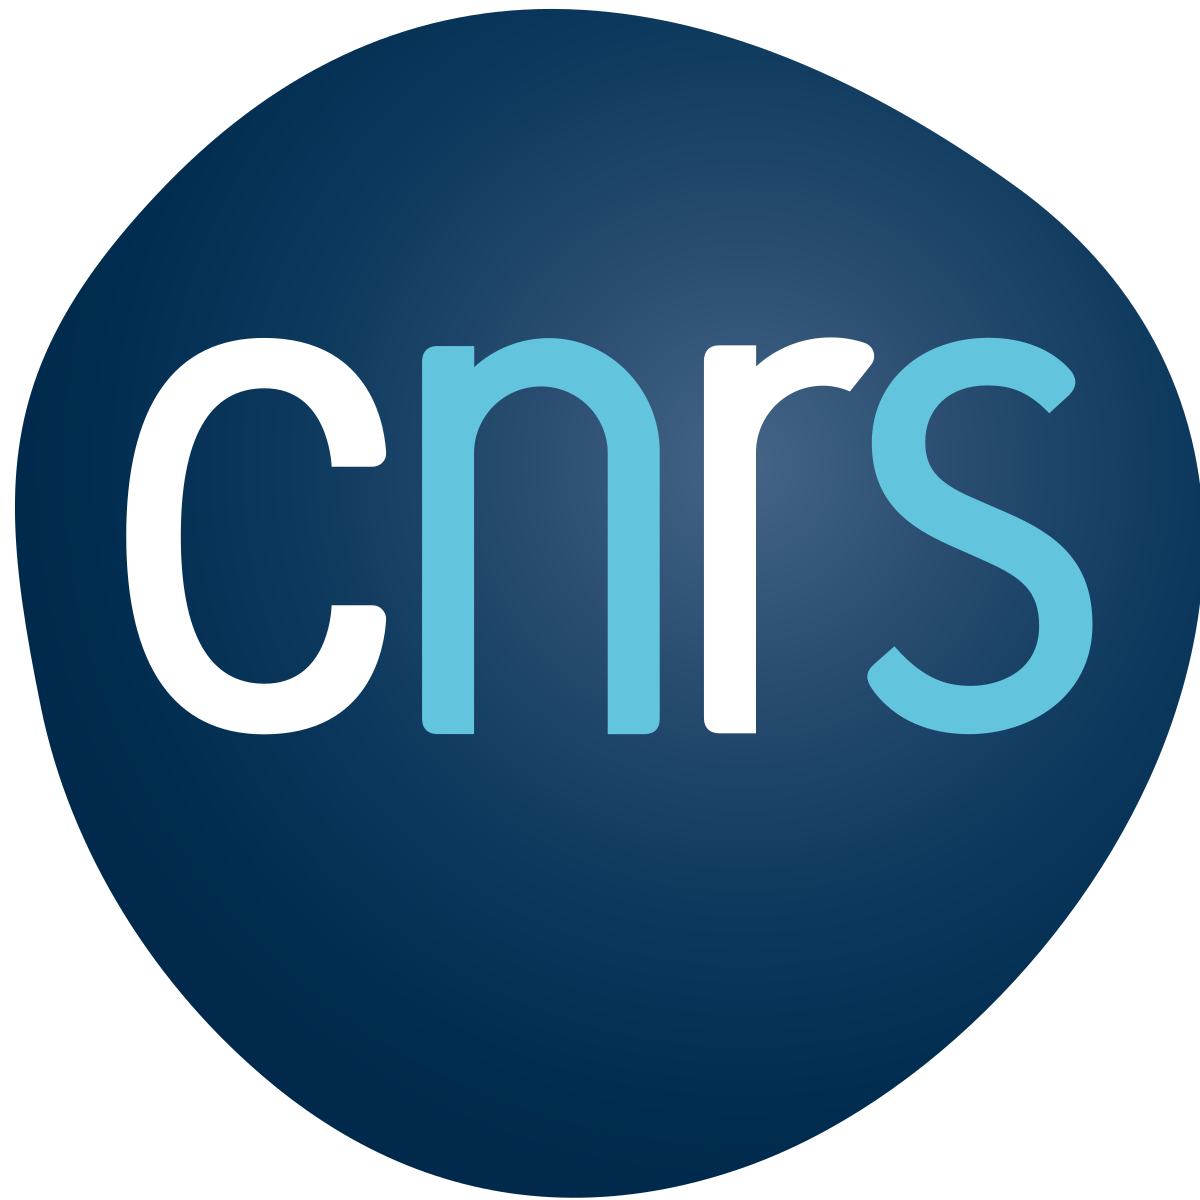 logo-CNRS